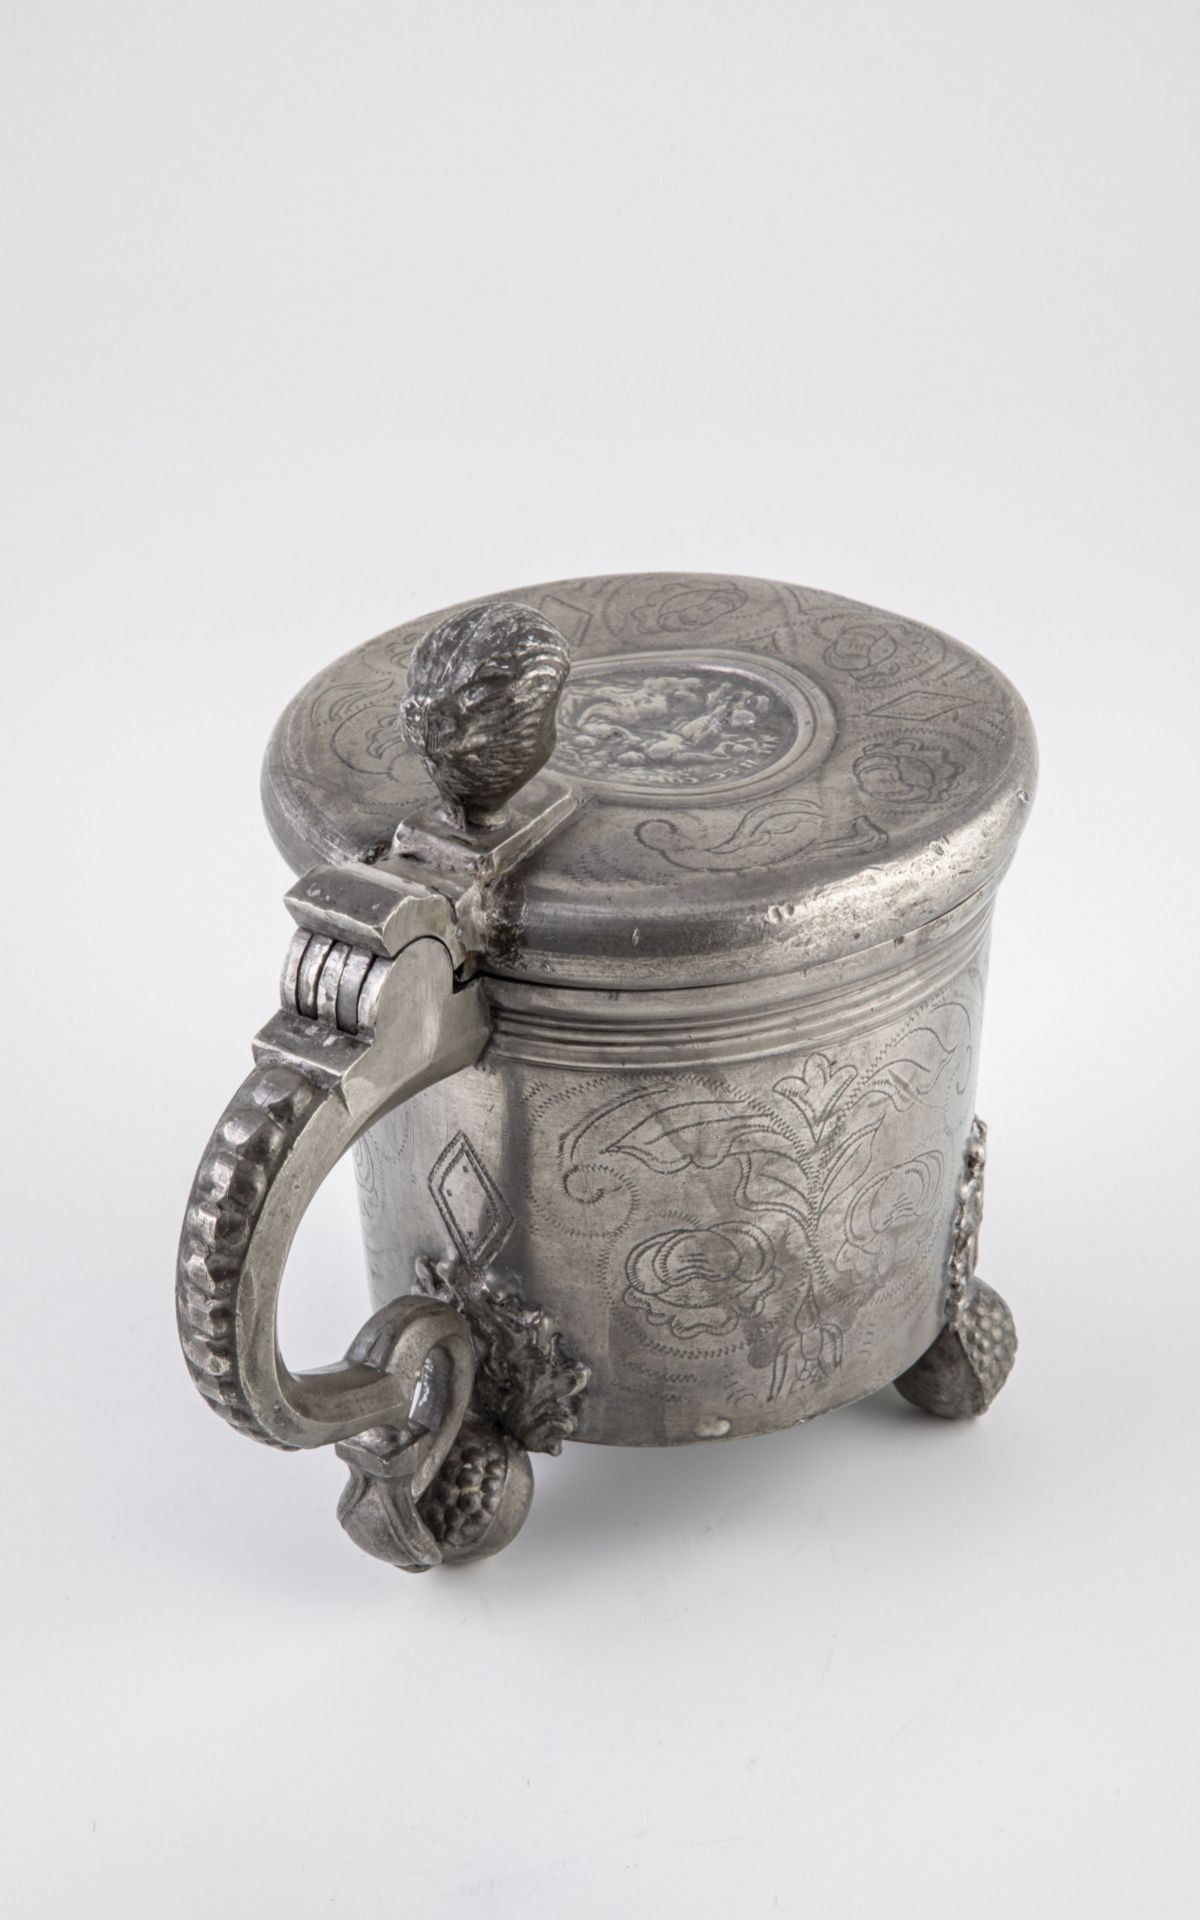 Baroque pewter wedding jug - Image 2 of 3